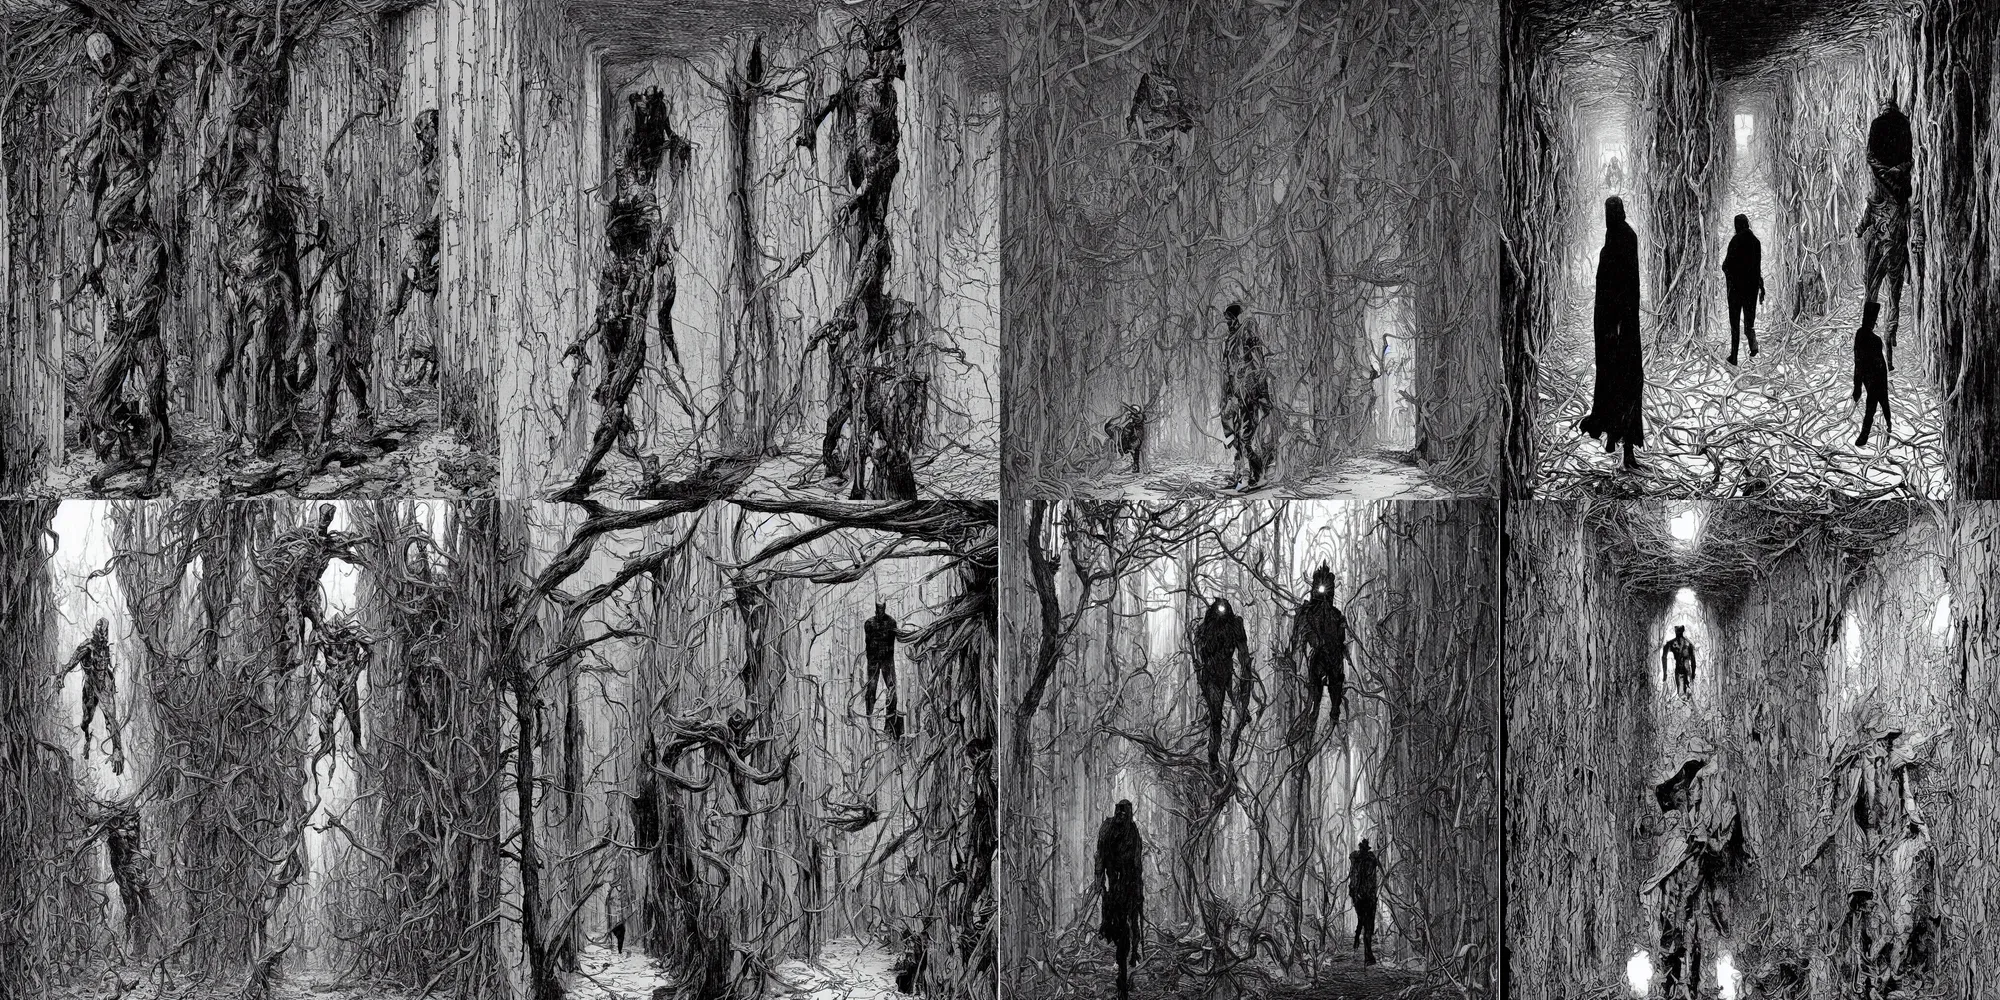 Prompt: a 7 meters man walks in an old wood corridor, 2 meters, black and white illustration, by james jean and wayne barlowe and moebius